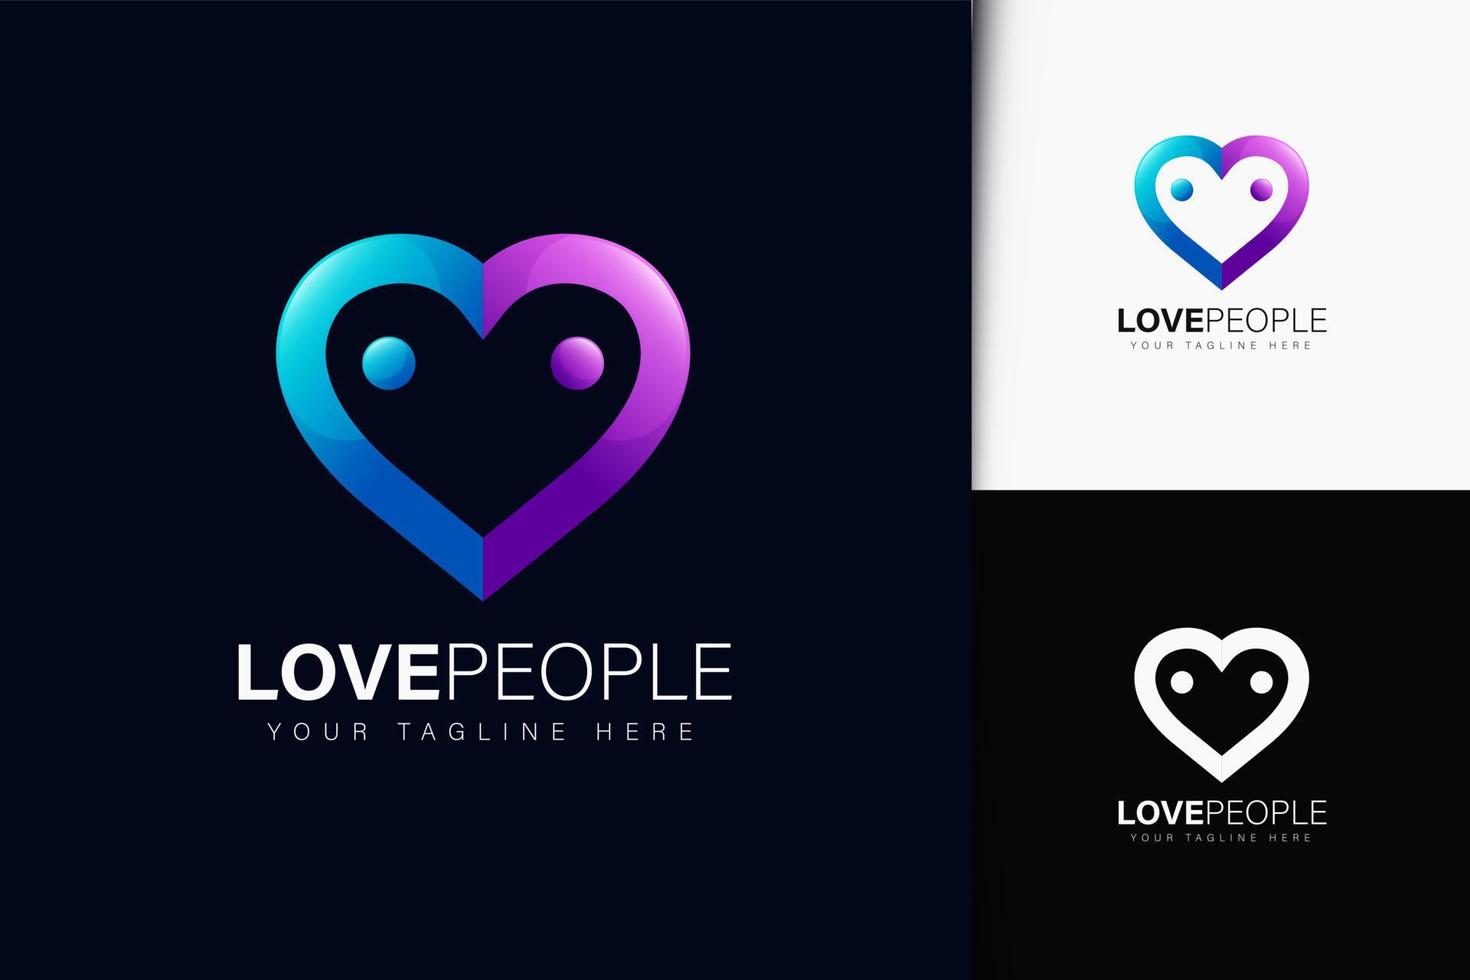 Love people logo design with gradient vector